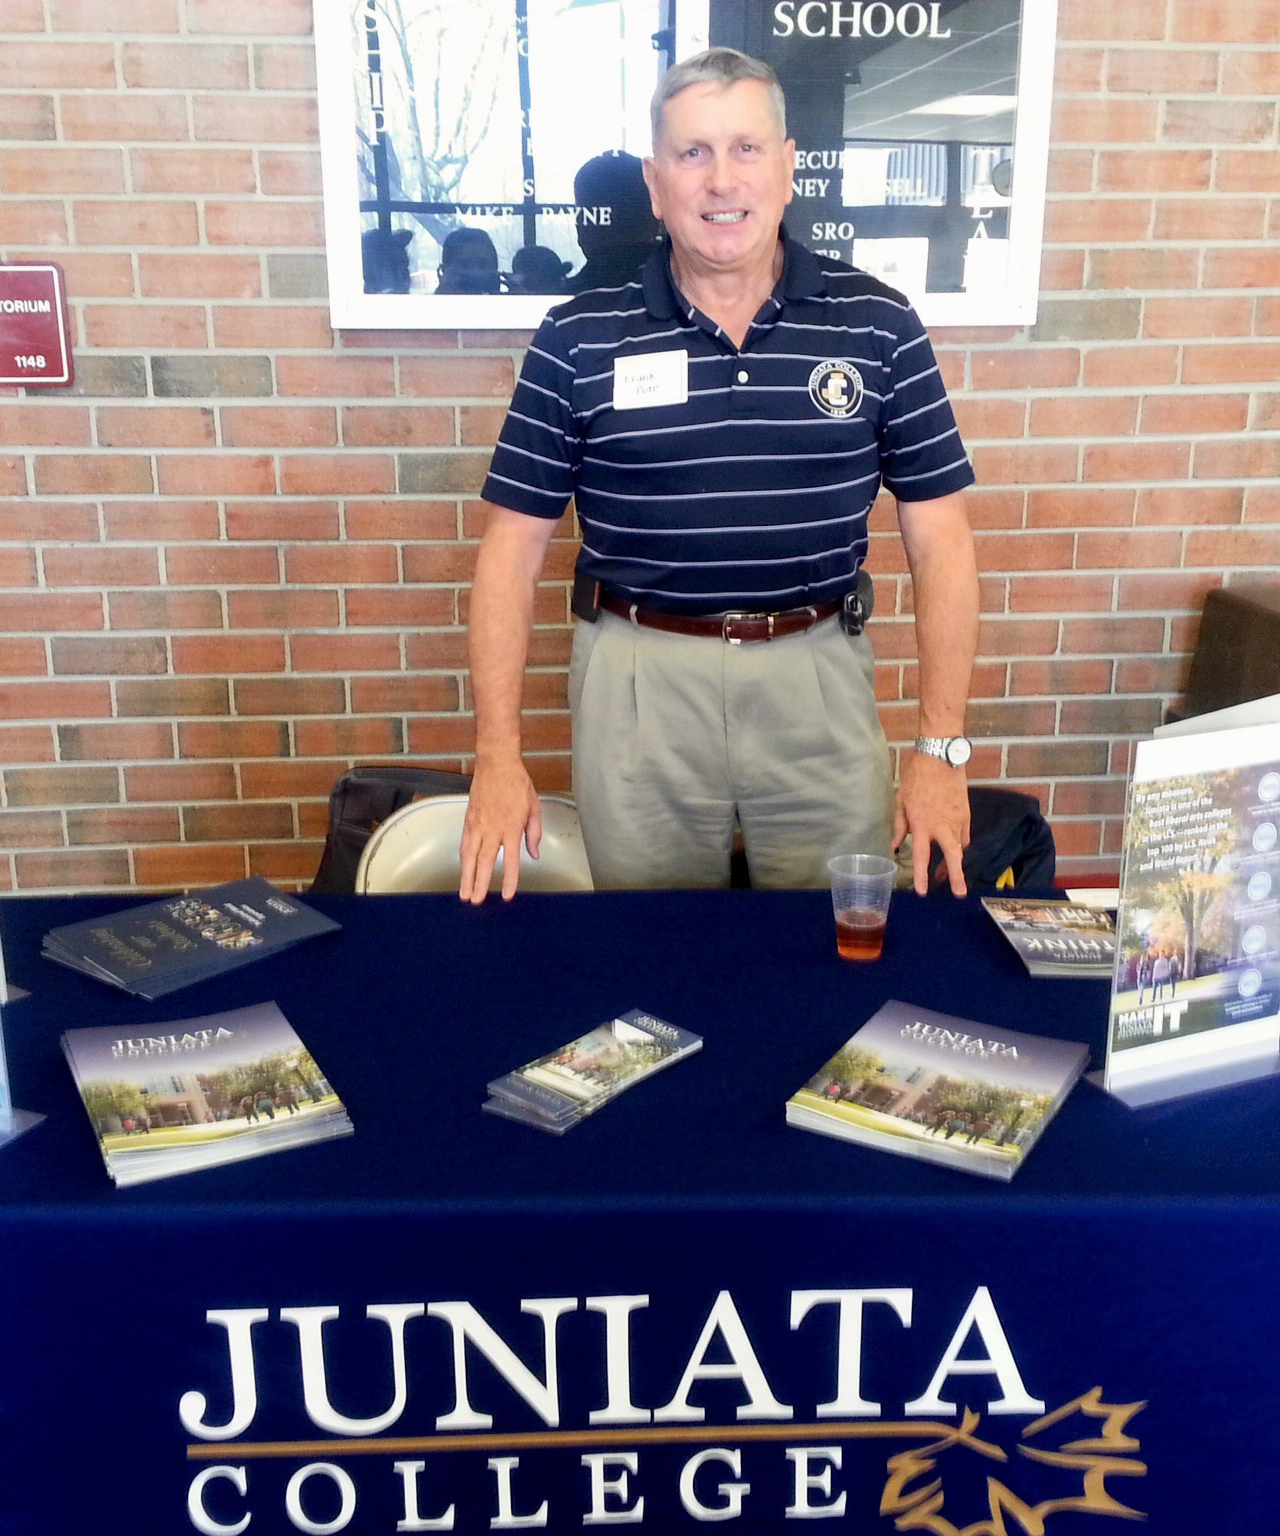 Frank Pote representing Juniata College at a College Fair